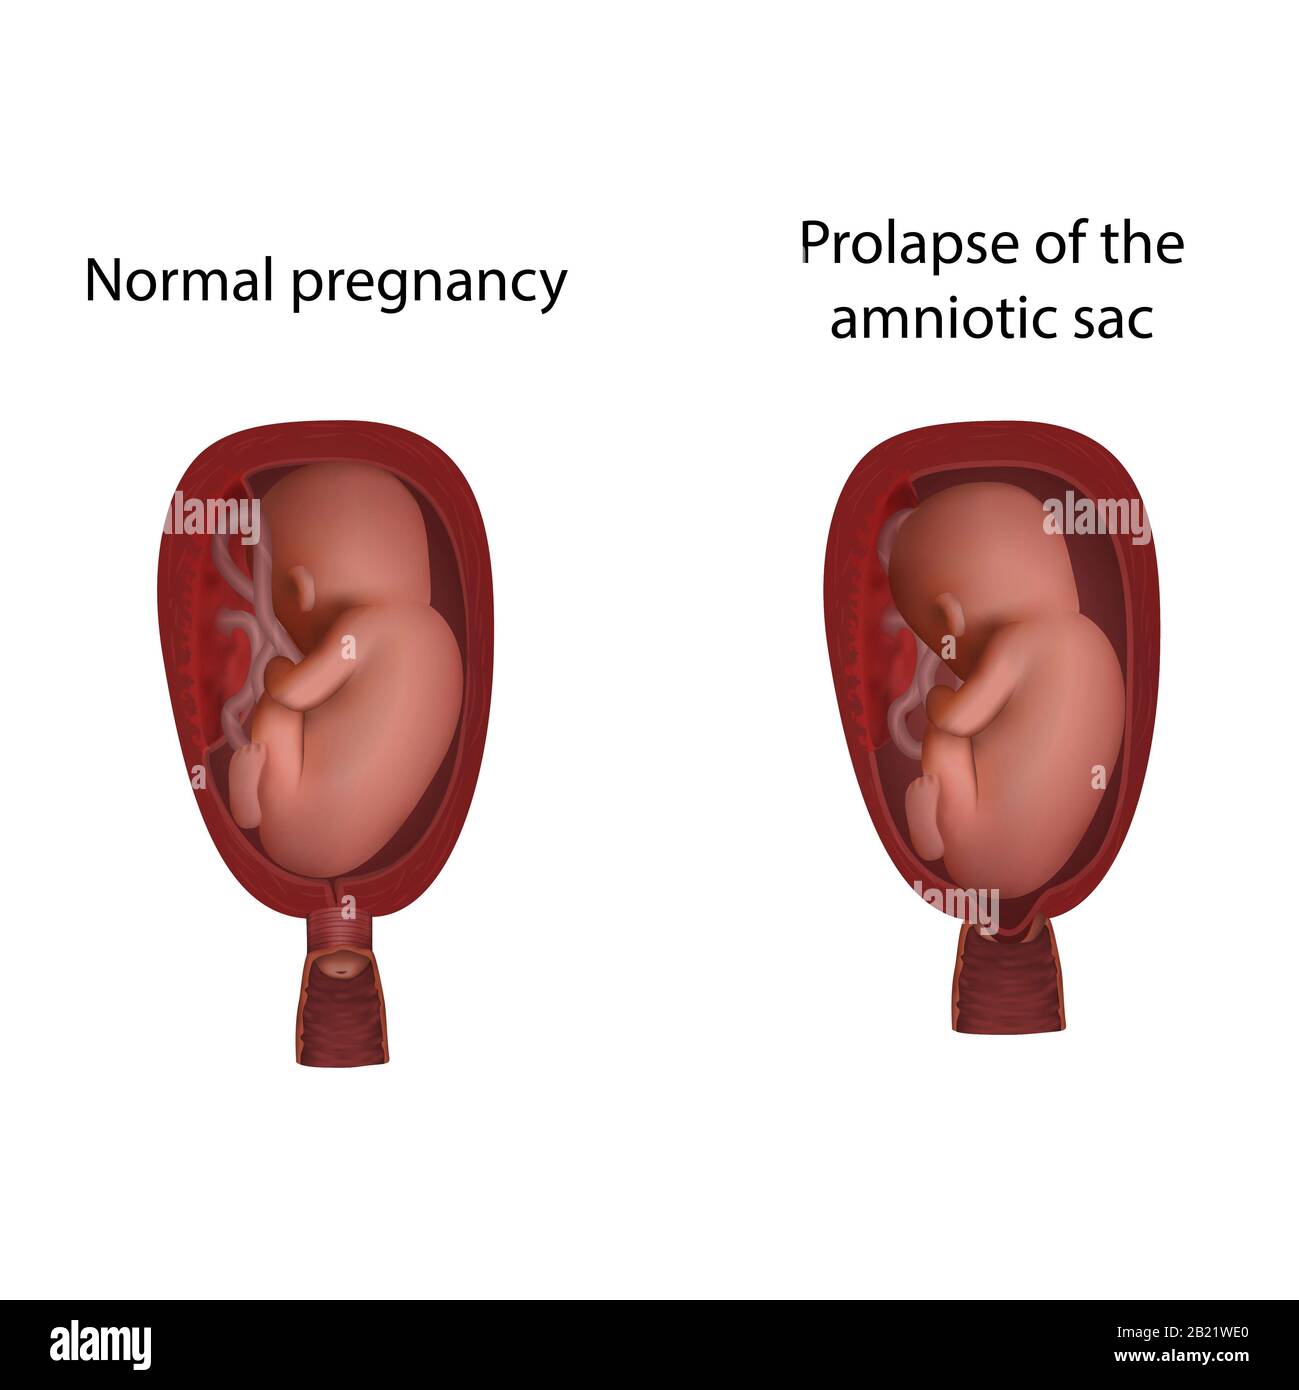 Amniotic sac prolapse and normal pregnancy, illustration Stock Photo - Alamy